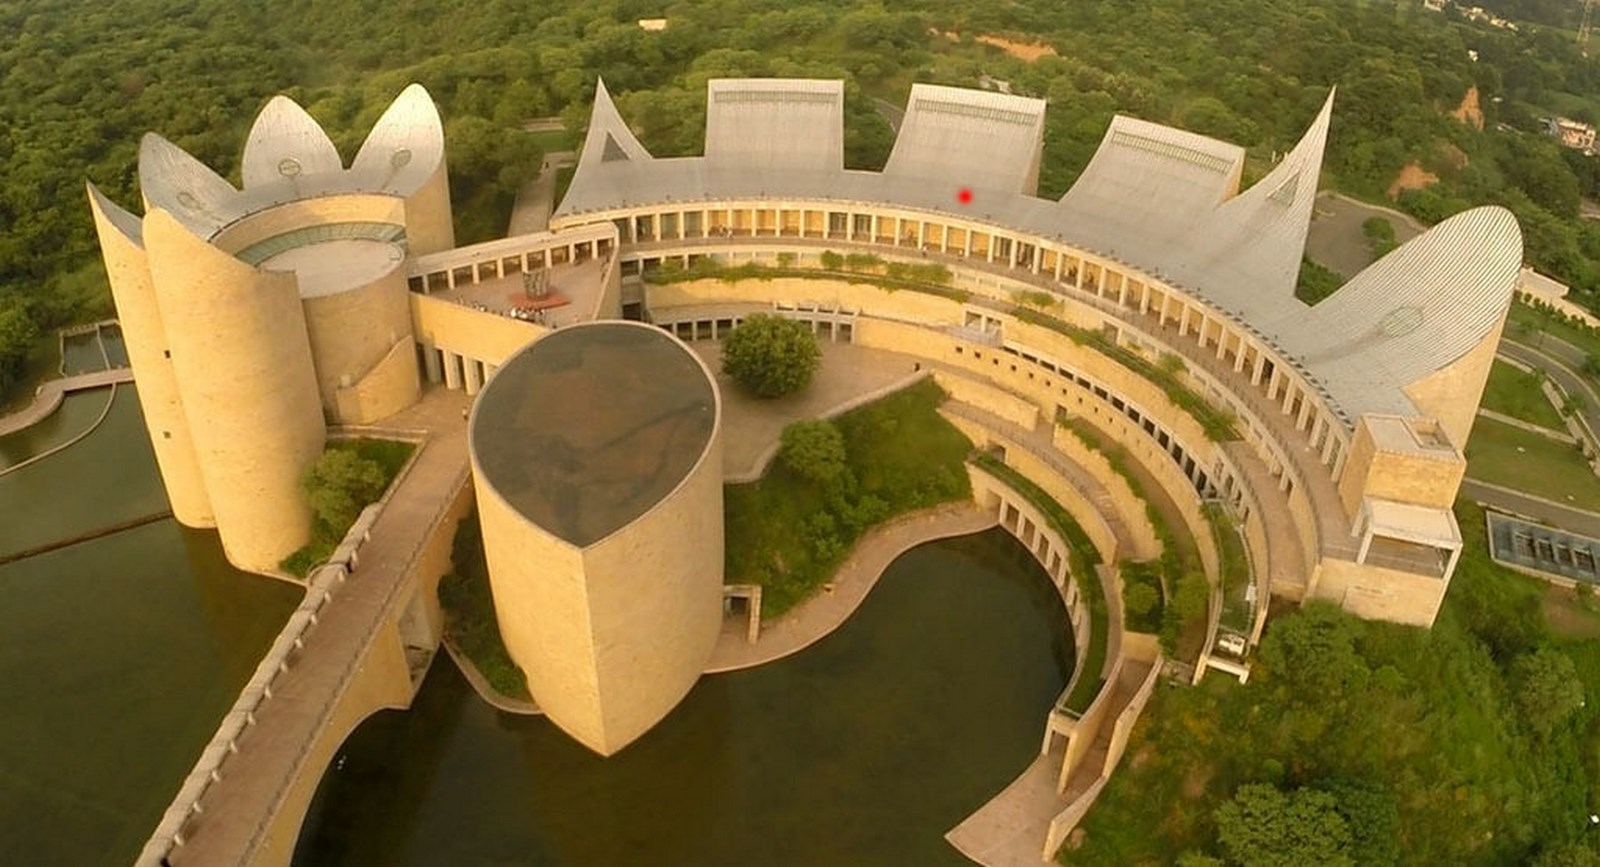 100 Best Architecture Projects of the 21st Century - Virasat-E-Khalsa Anandpur Sahib, Punjab, India by Moshe Safdie